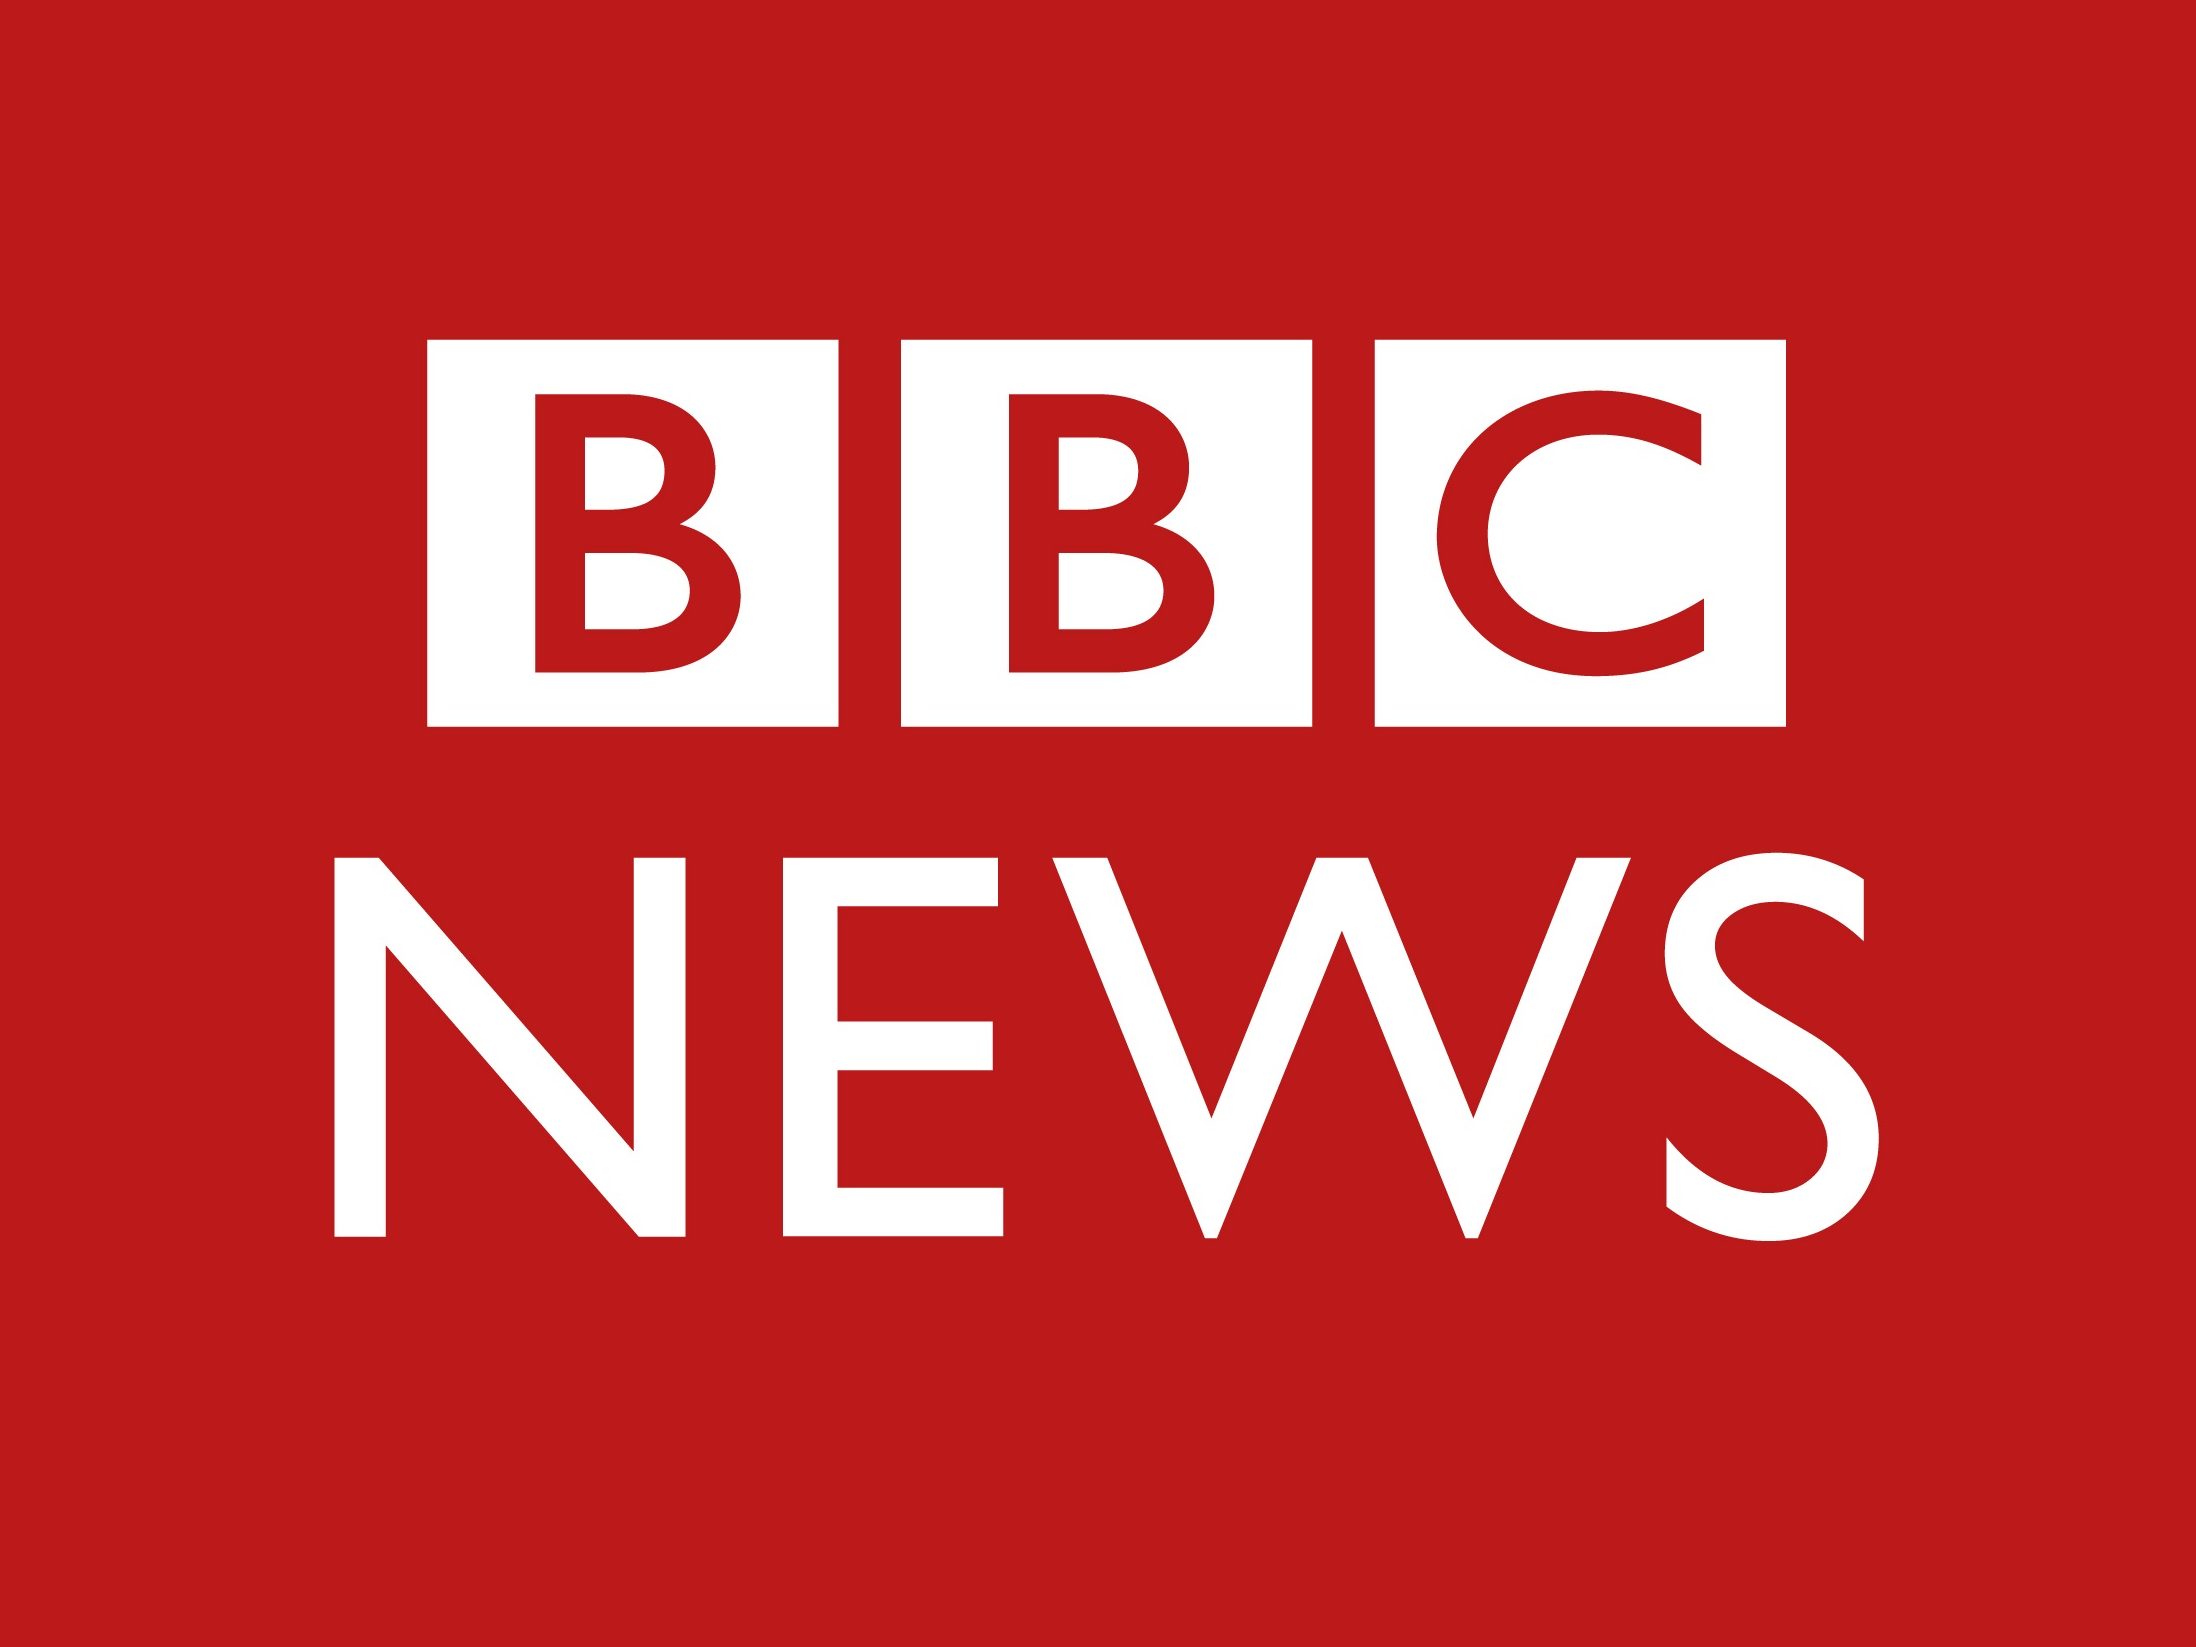 Bbc на русском языке. Значок bbc. Bbc News. Bbc News (Телеканал). Bbc News логотип 2022.